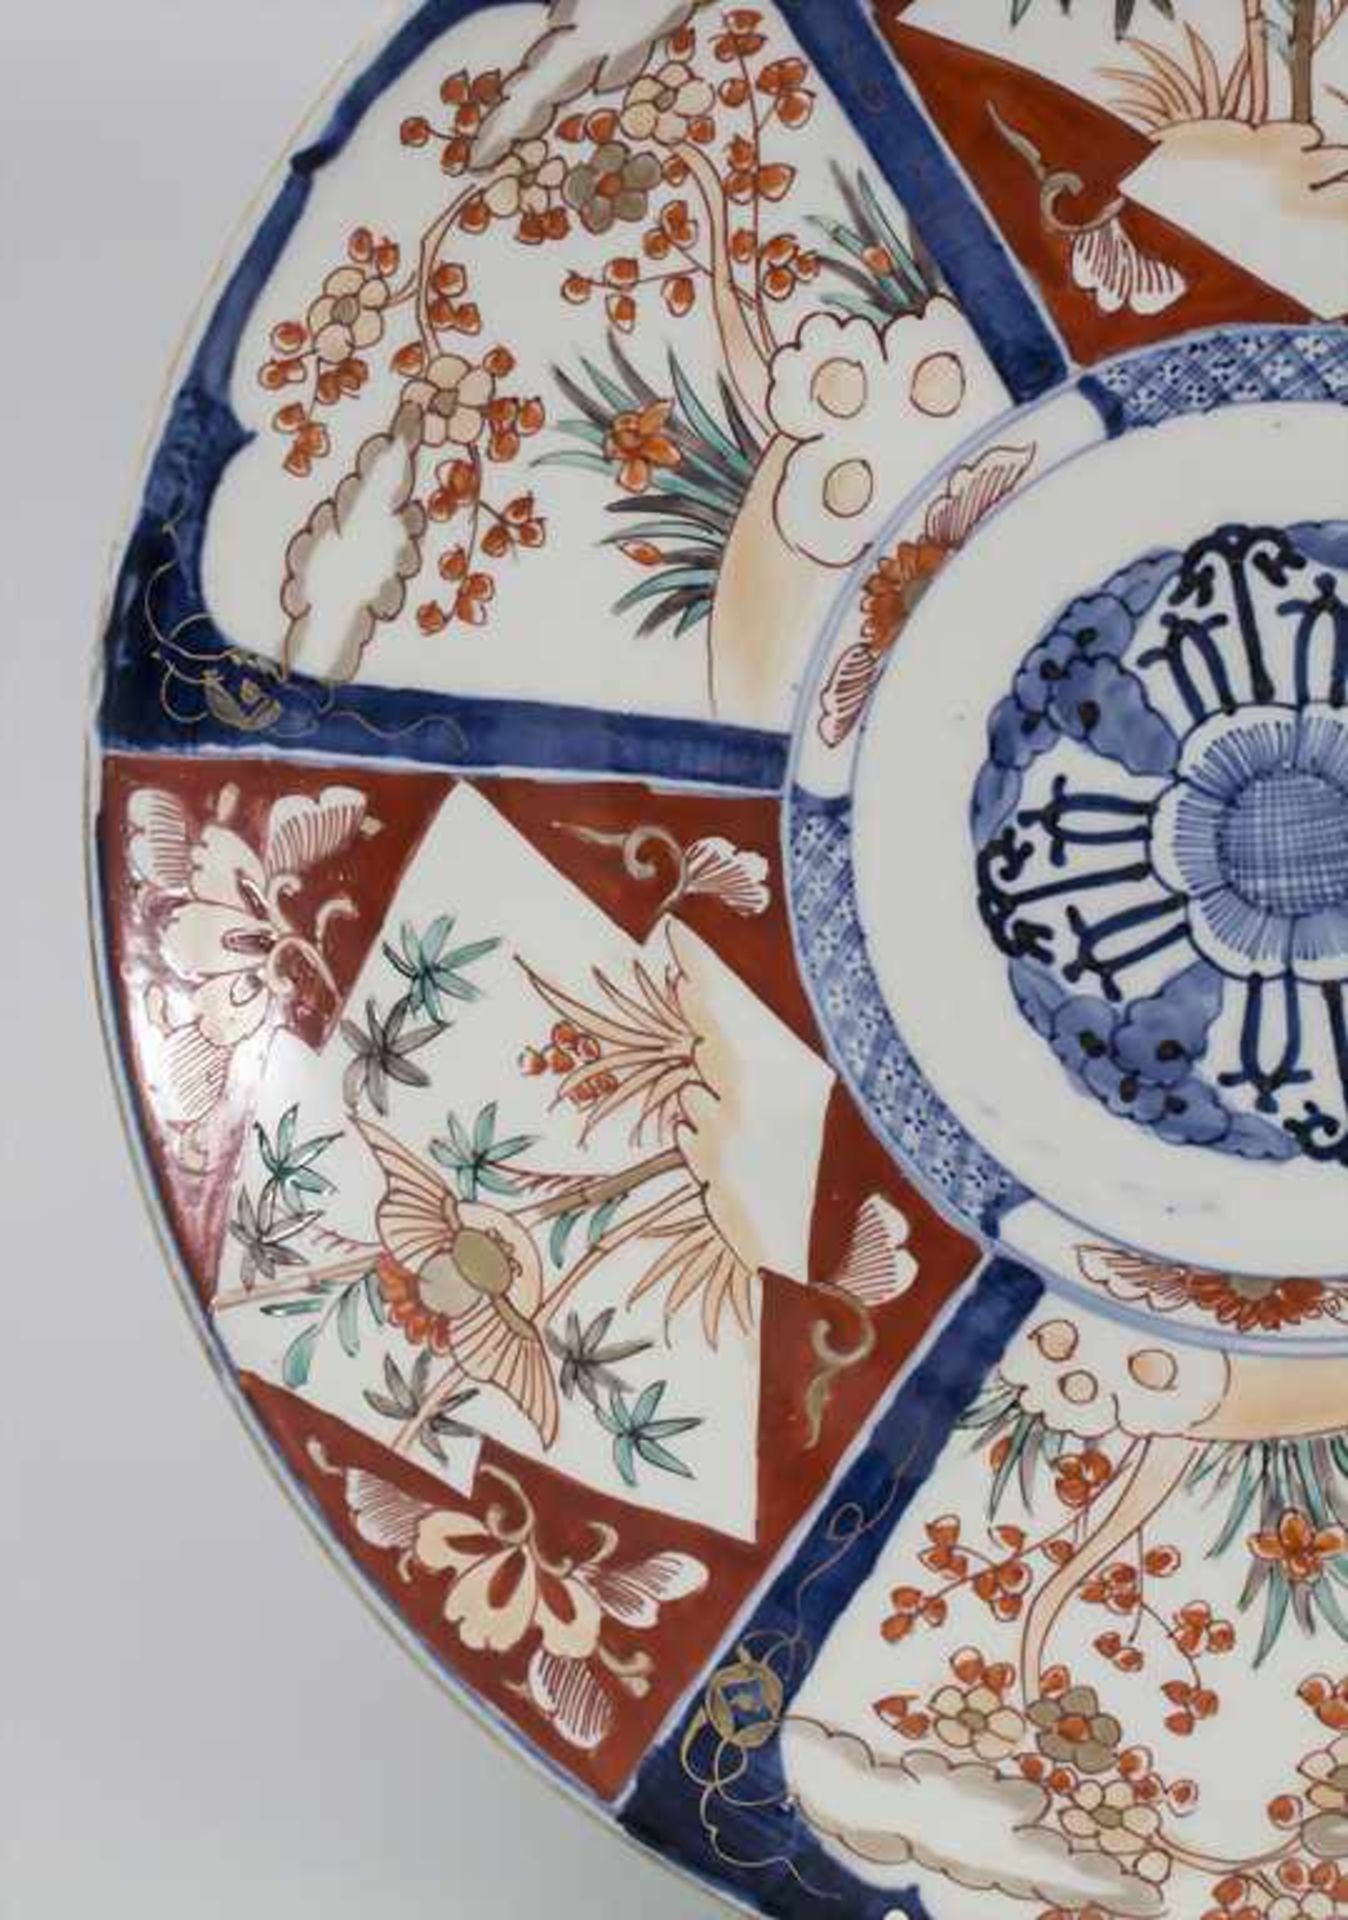 Wandteller mit Imaridekor / A wall plate with Imari patterns, China, um 1900 - Image 2 of 5